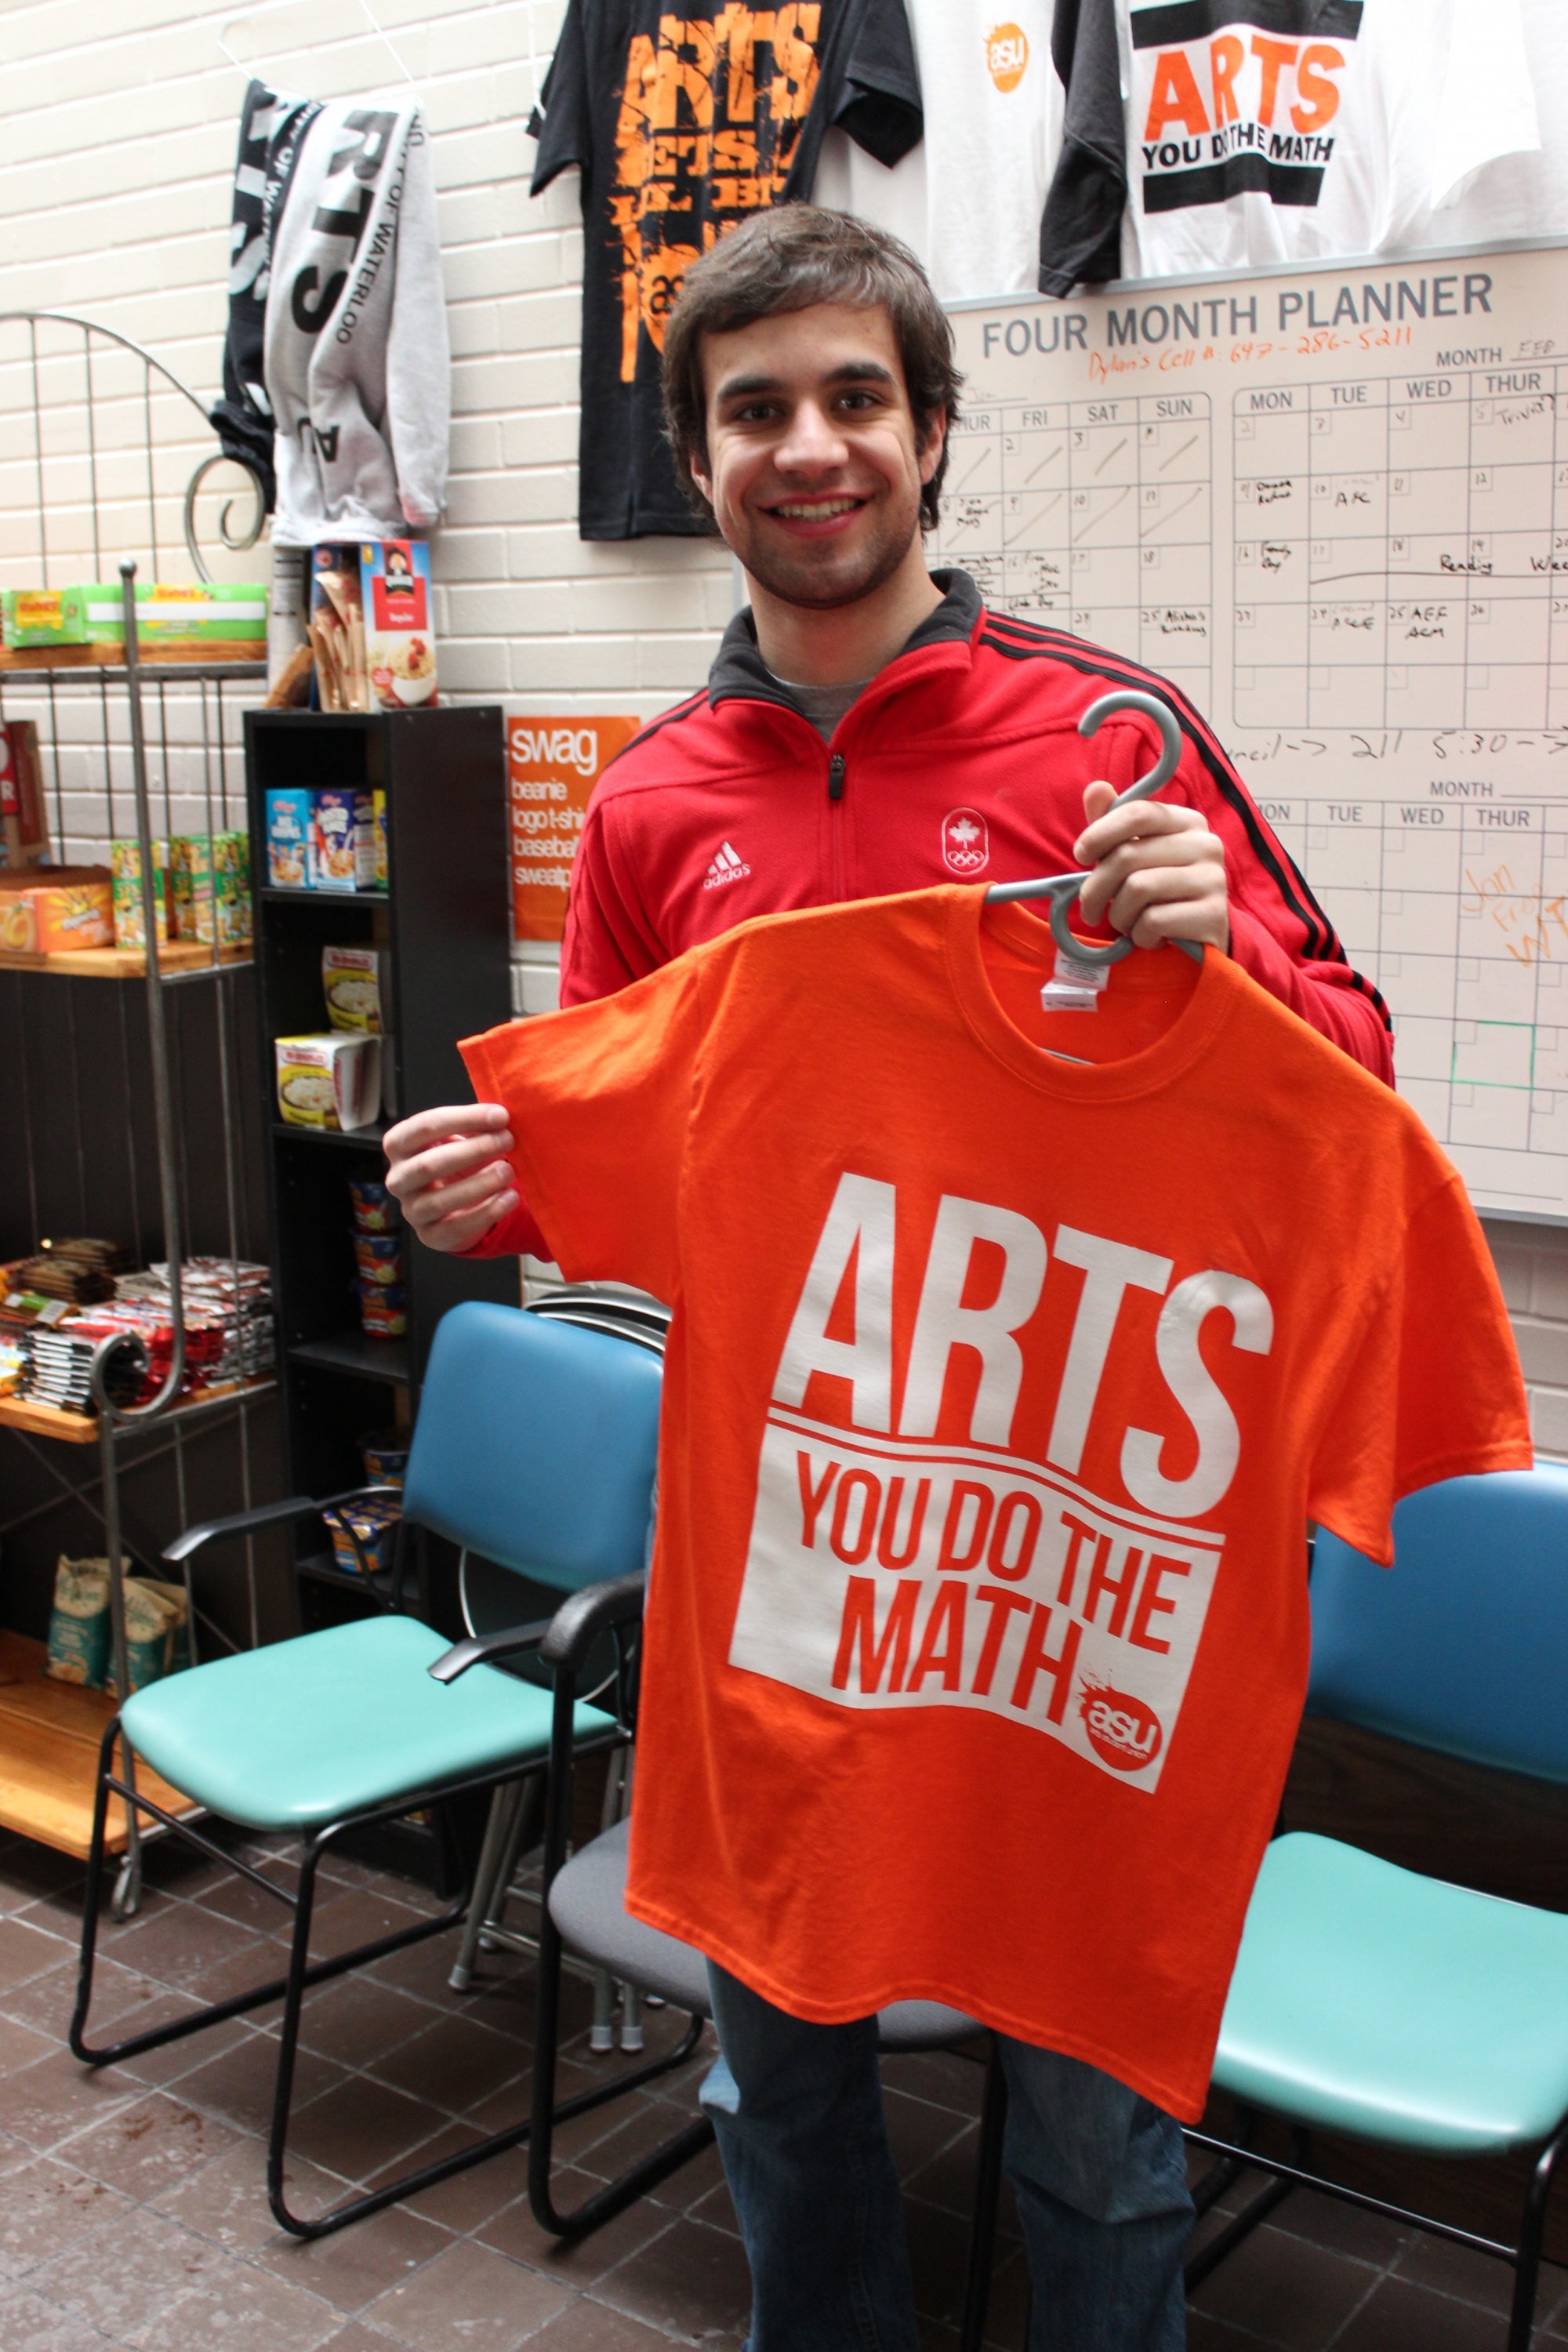 Arts Student Union member holding up an orange shirt.